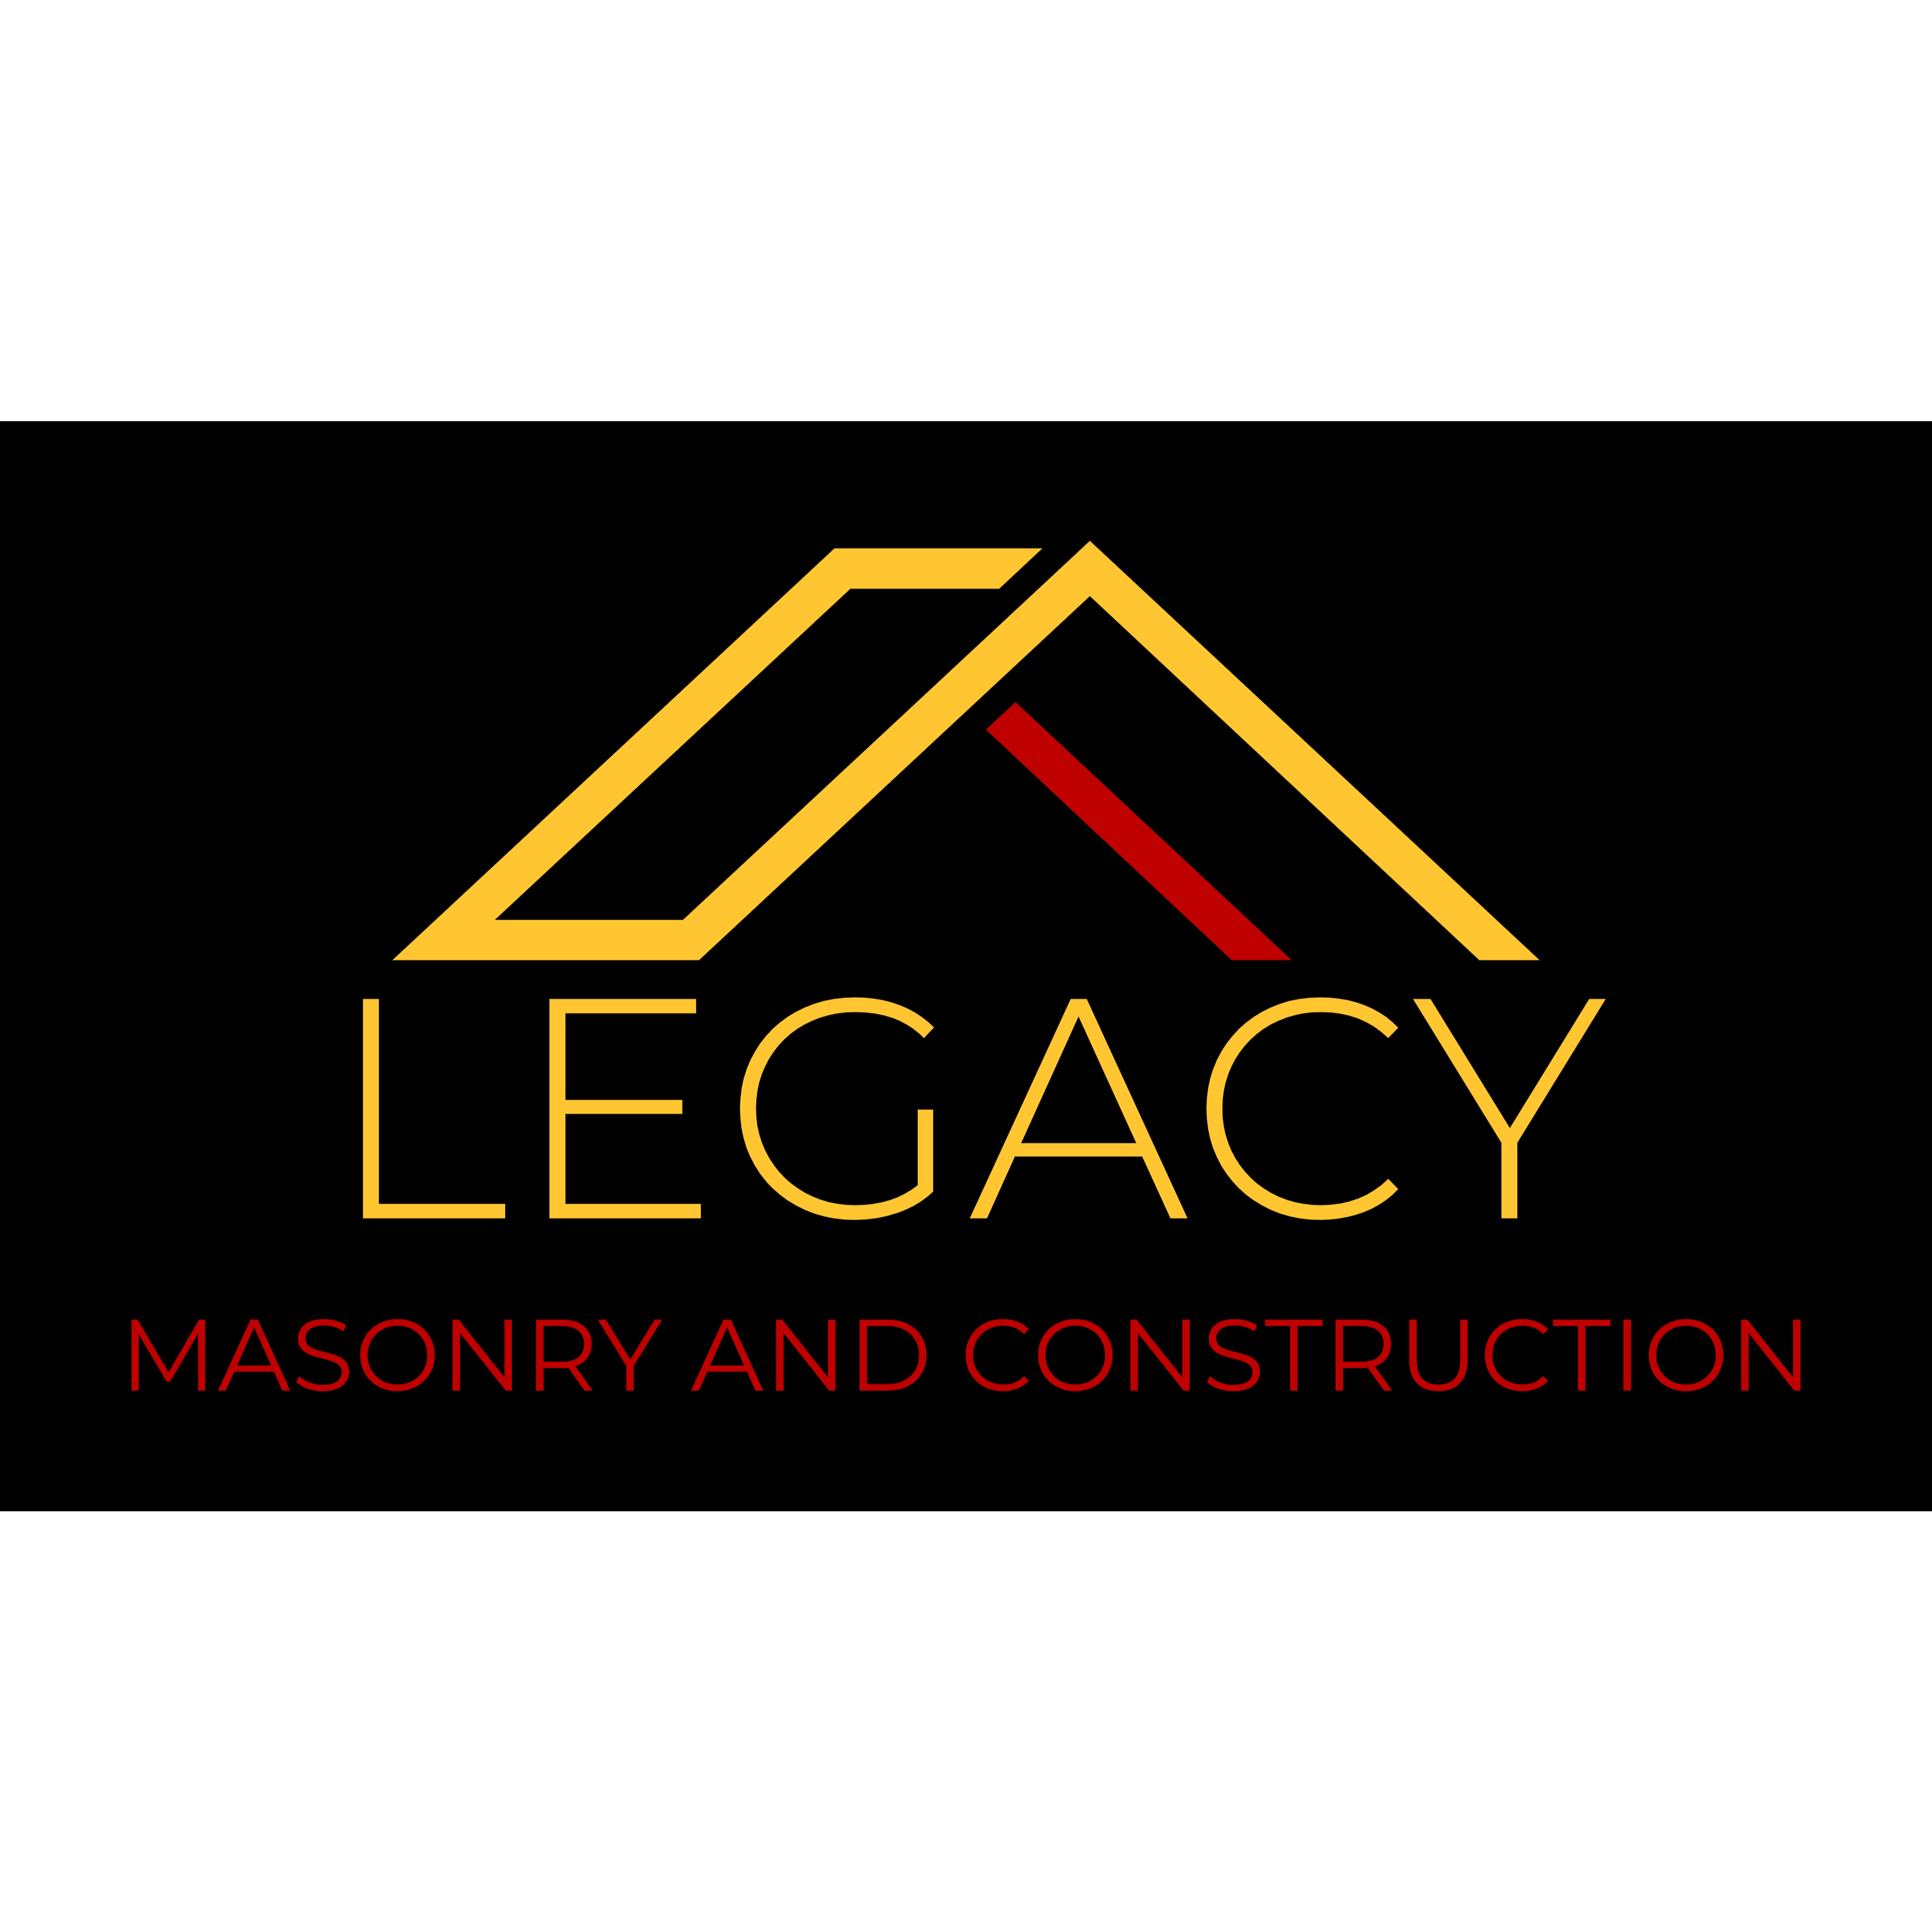 Legacy Masonry and Construction